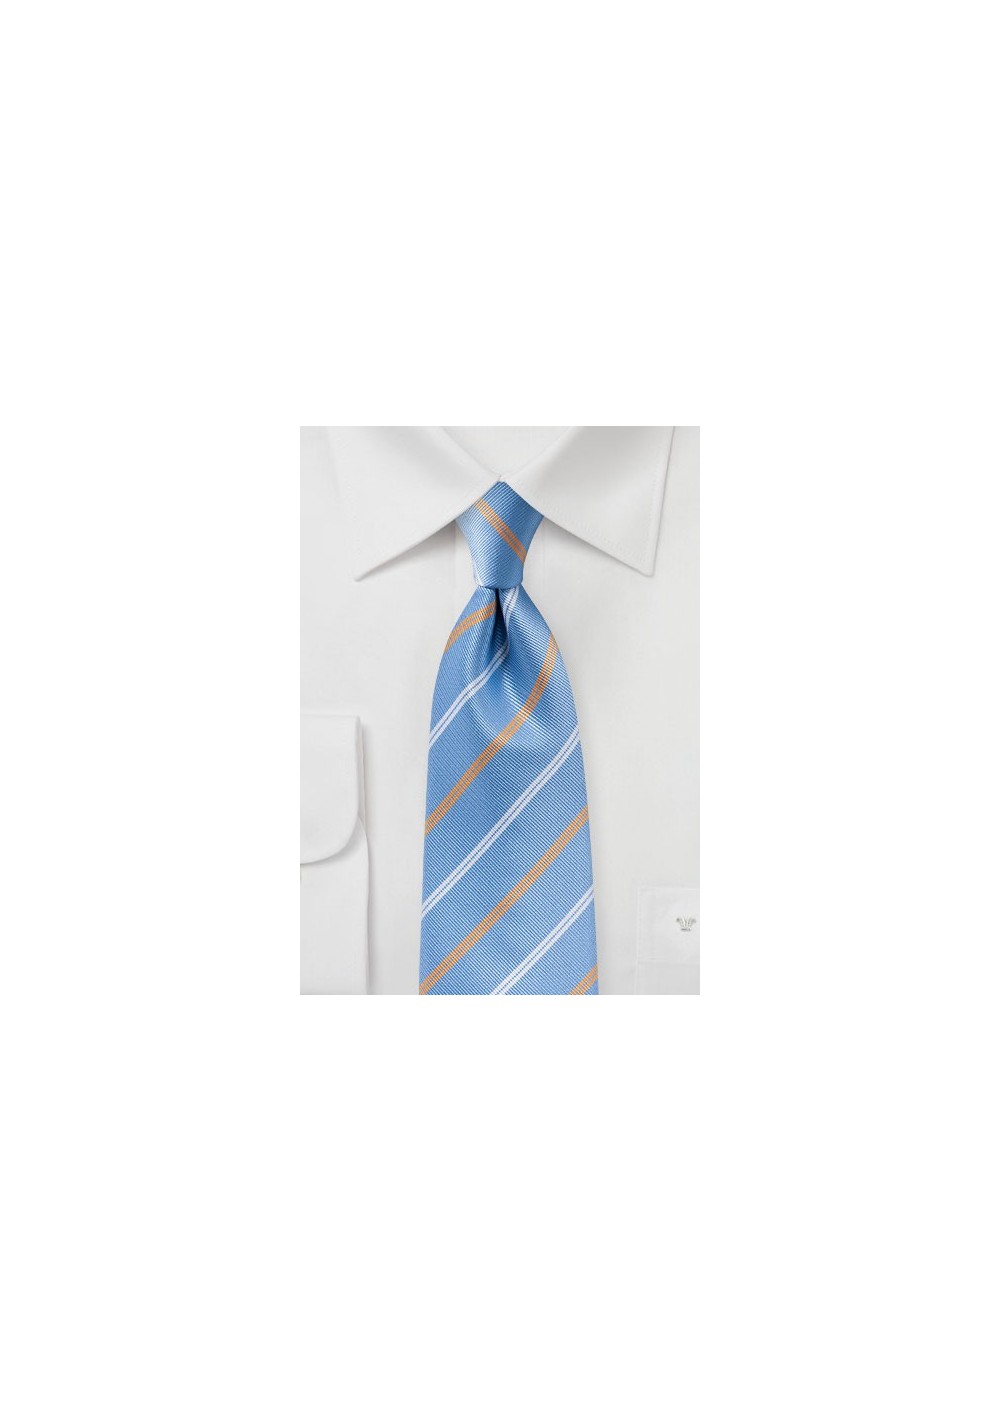 Repp Stripe Tie in Bonnie Blue